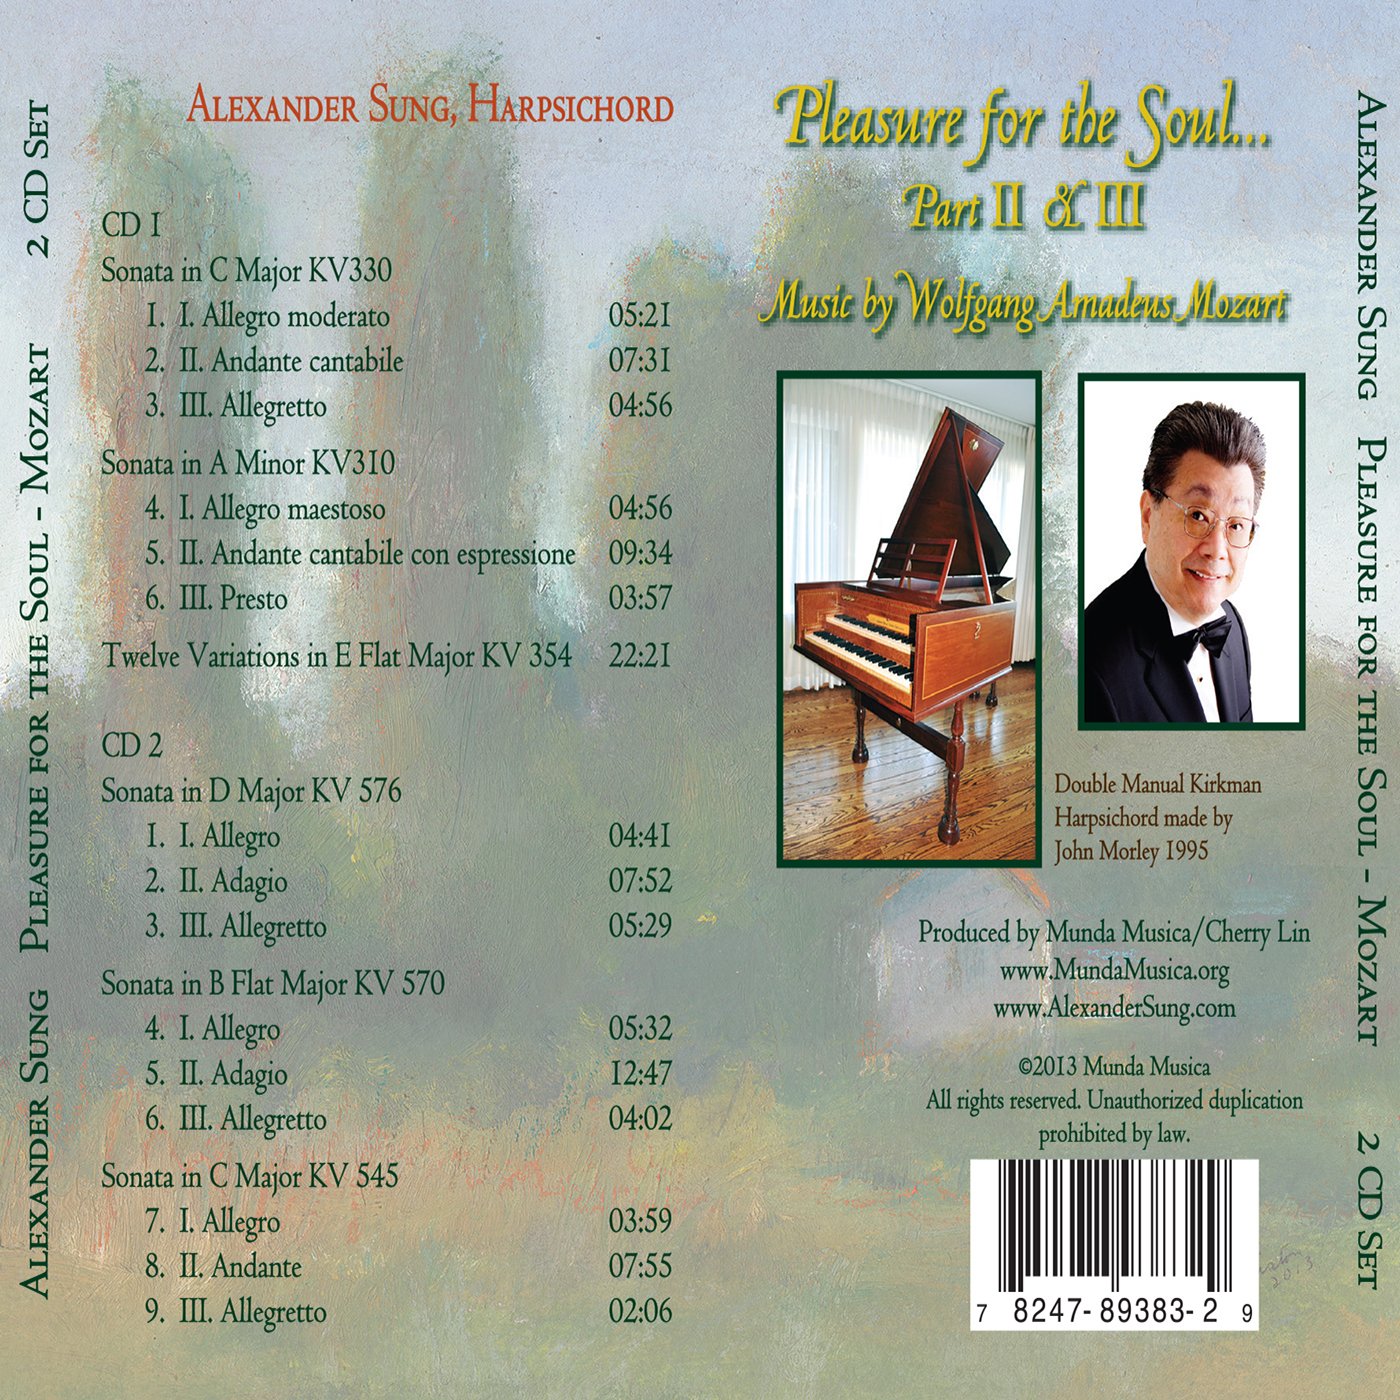 Pleasure for the Soul: Harpsichord Music of Wolfgang Amadeus Mozart (Parts II & III)